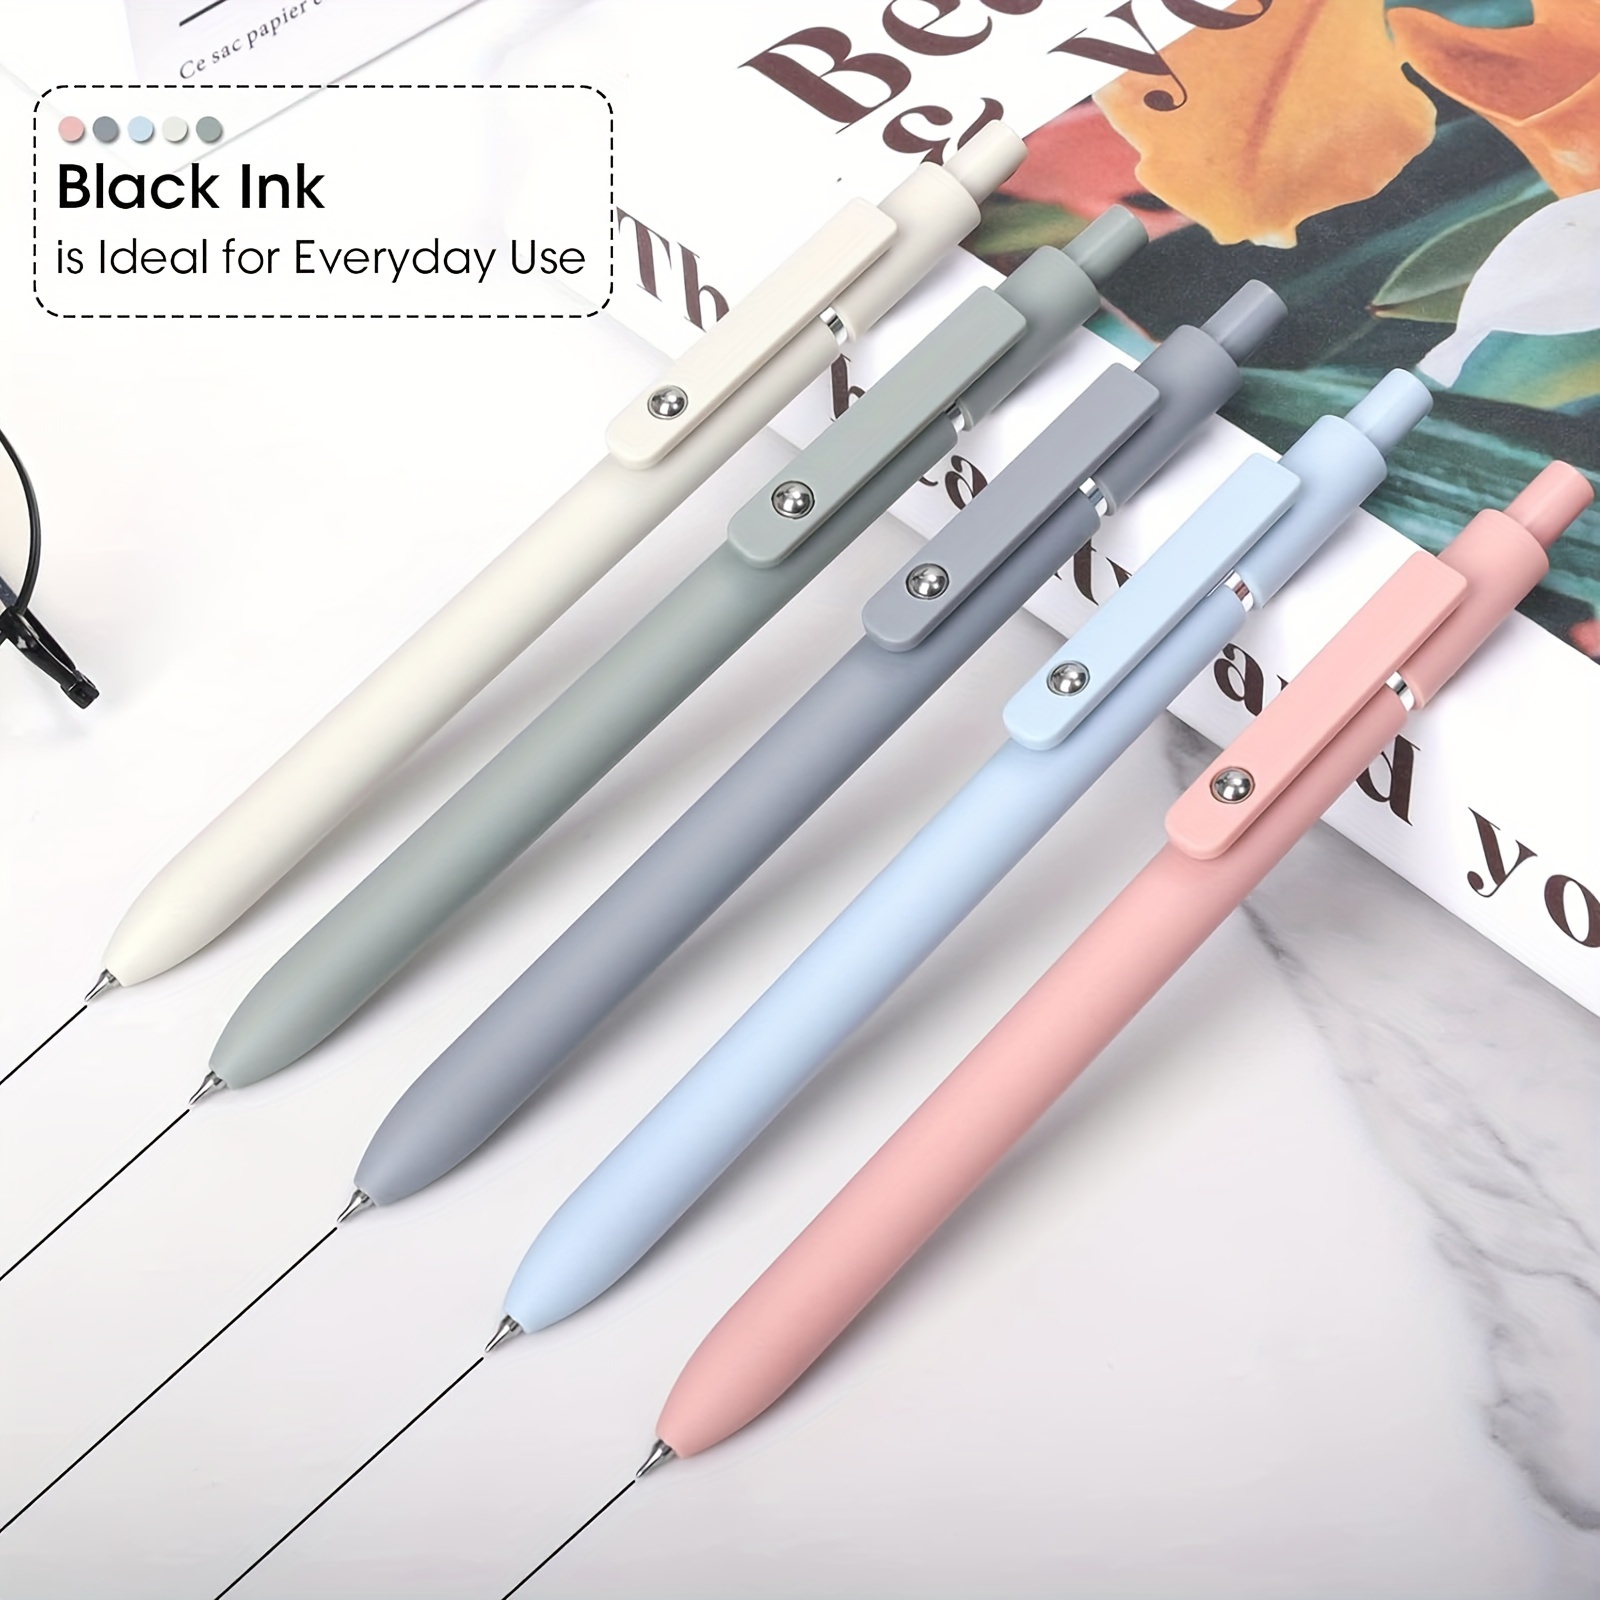 Aesthetic Highlighters And Gel Pens No Bleed Morandi Color - Temu